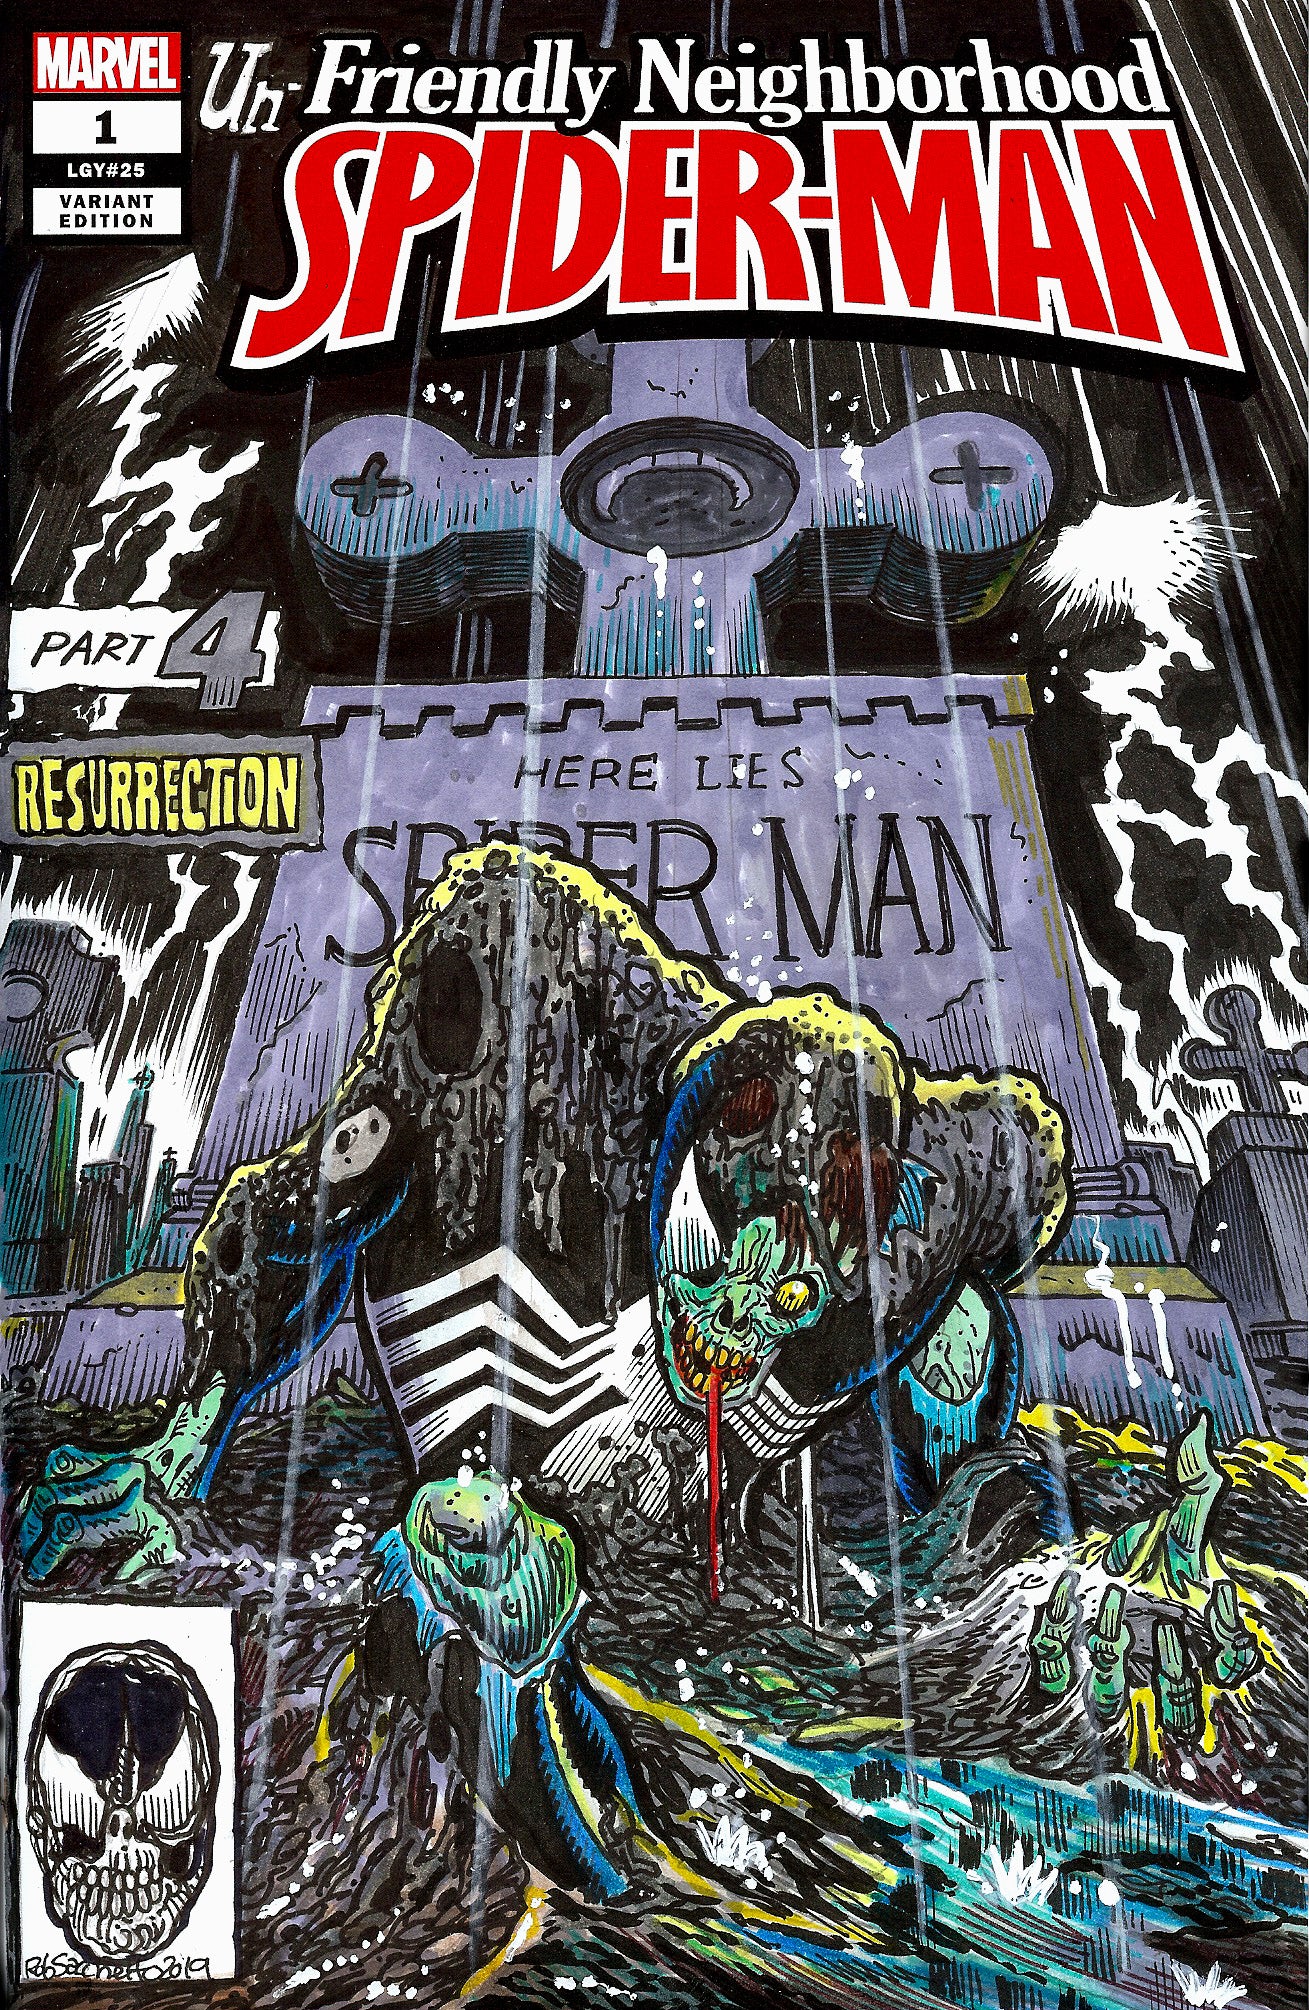 Zombie Comic Book Covers : Friendly Neighborhood Spider-Man #1